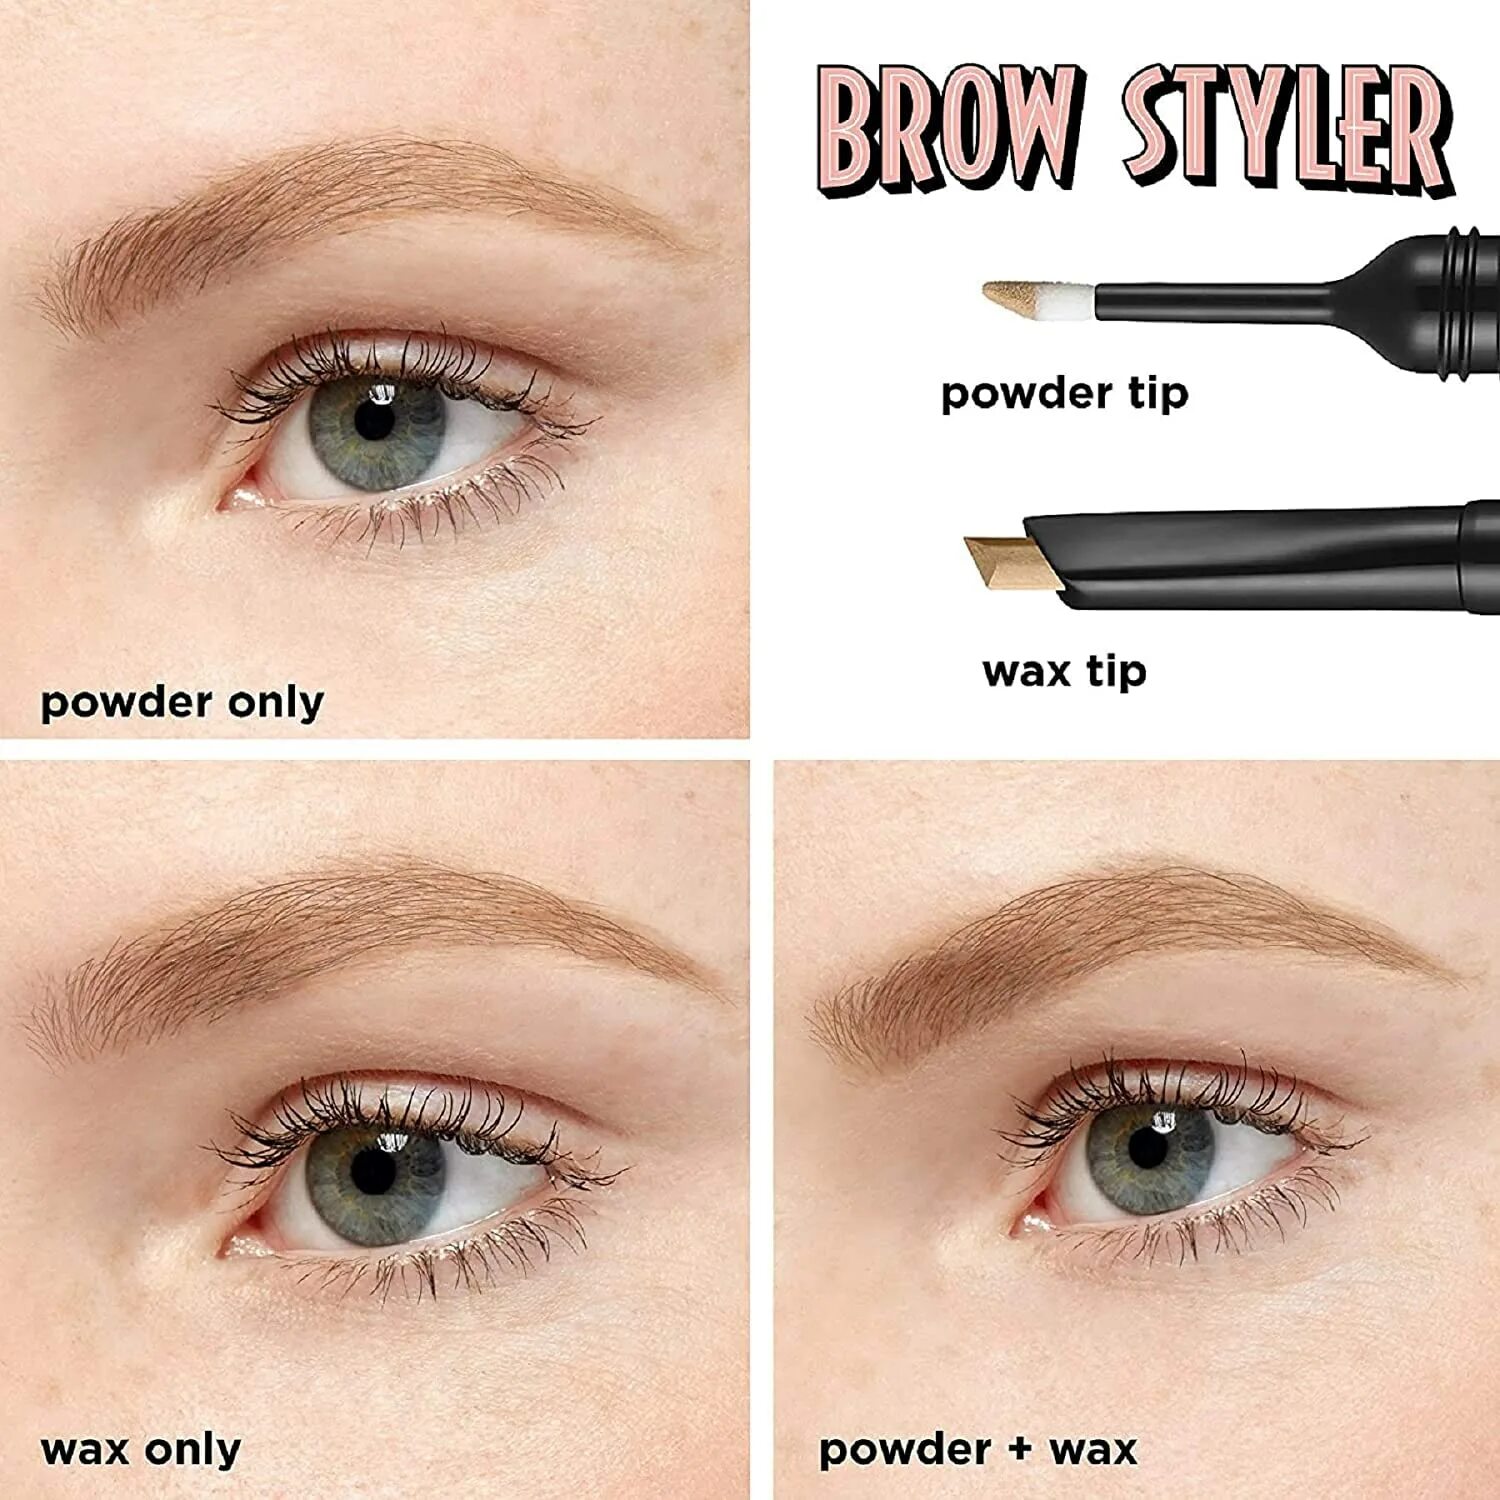 Benefit warm Light Brown карандаш для бровей. Benefit Brow Styler. Карандаш для бровей `Bell` perfect Brow Wax тон 01. Brow Styler benefit оттенки.